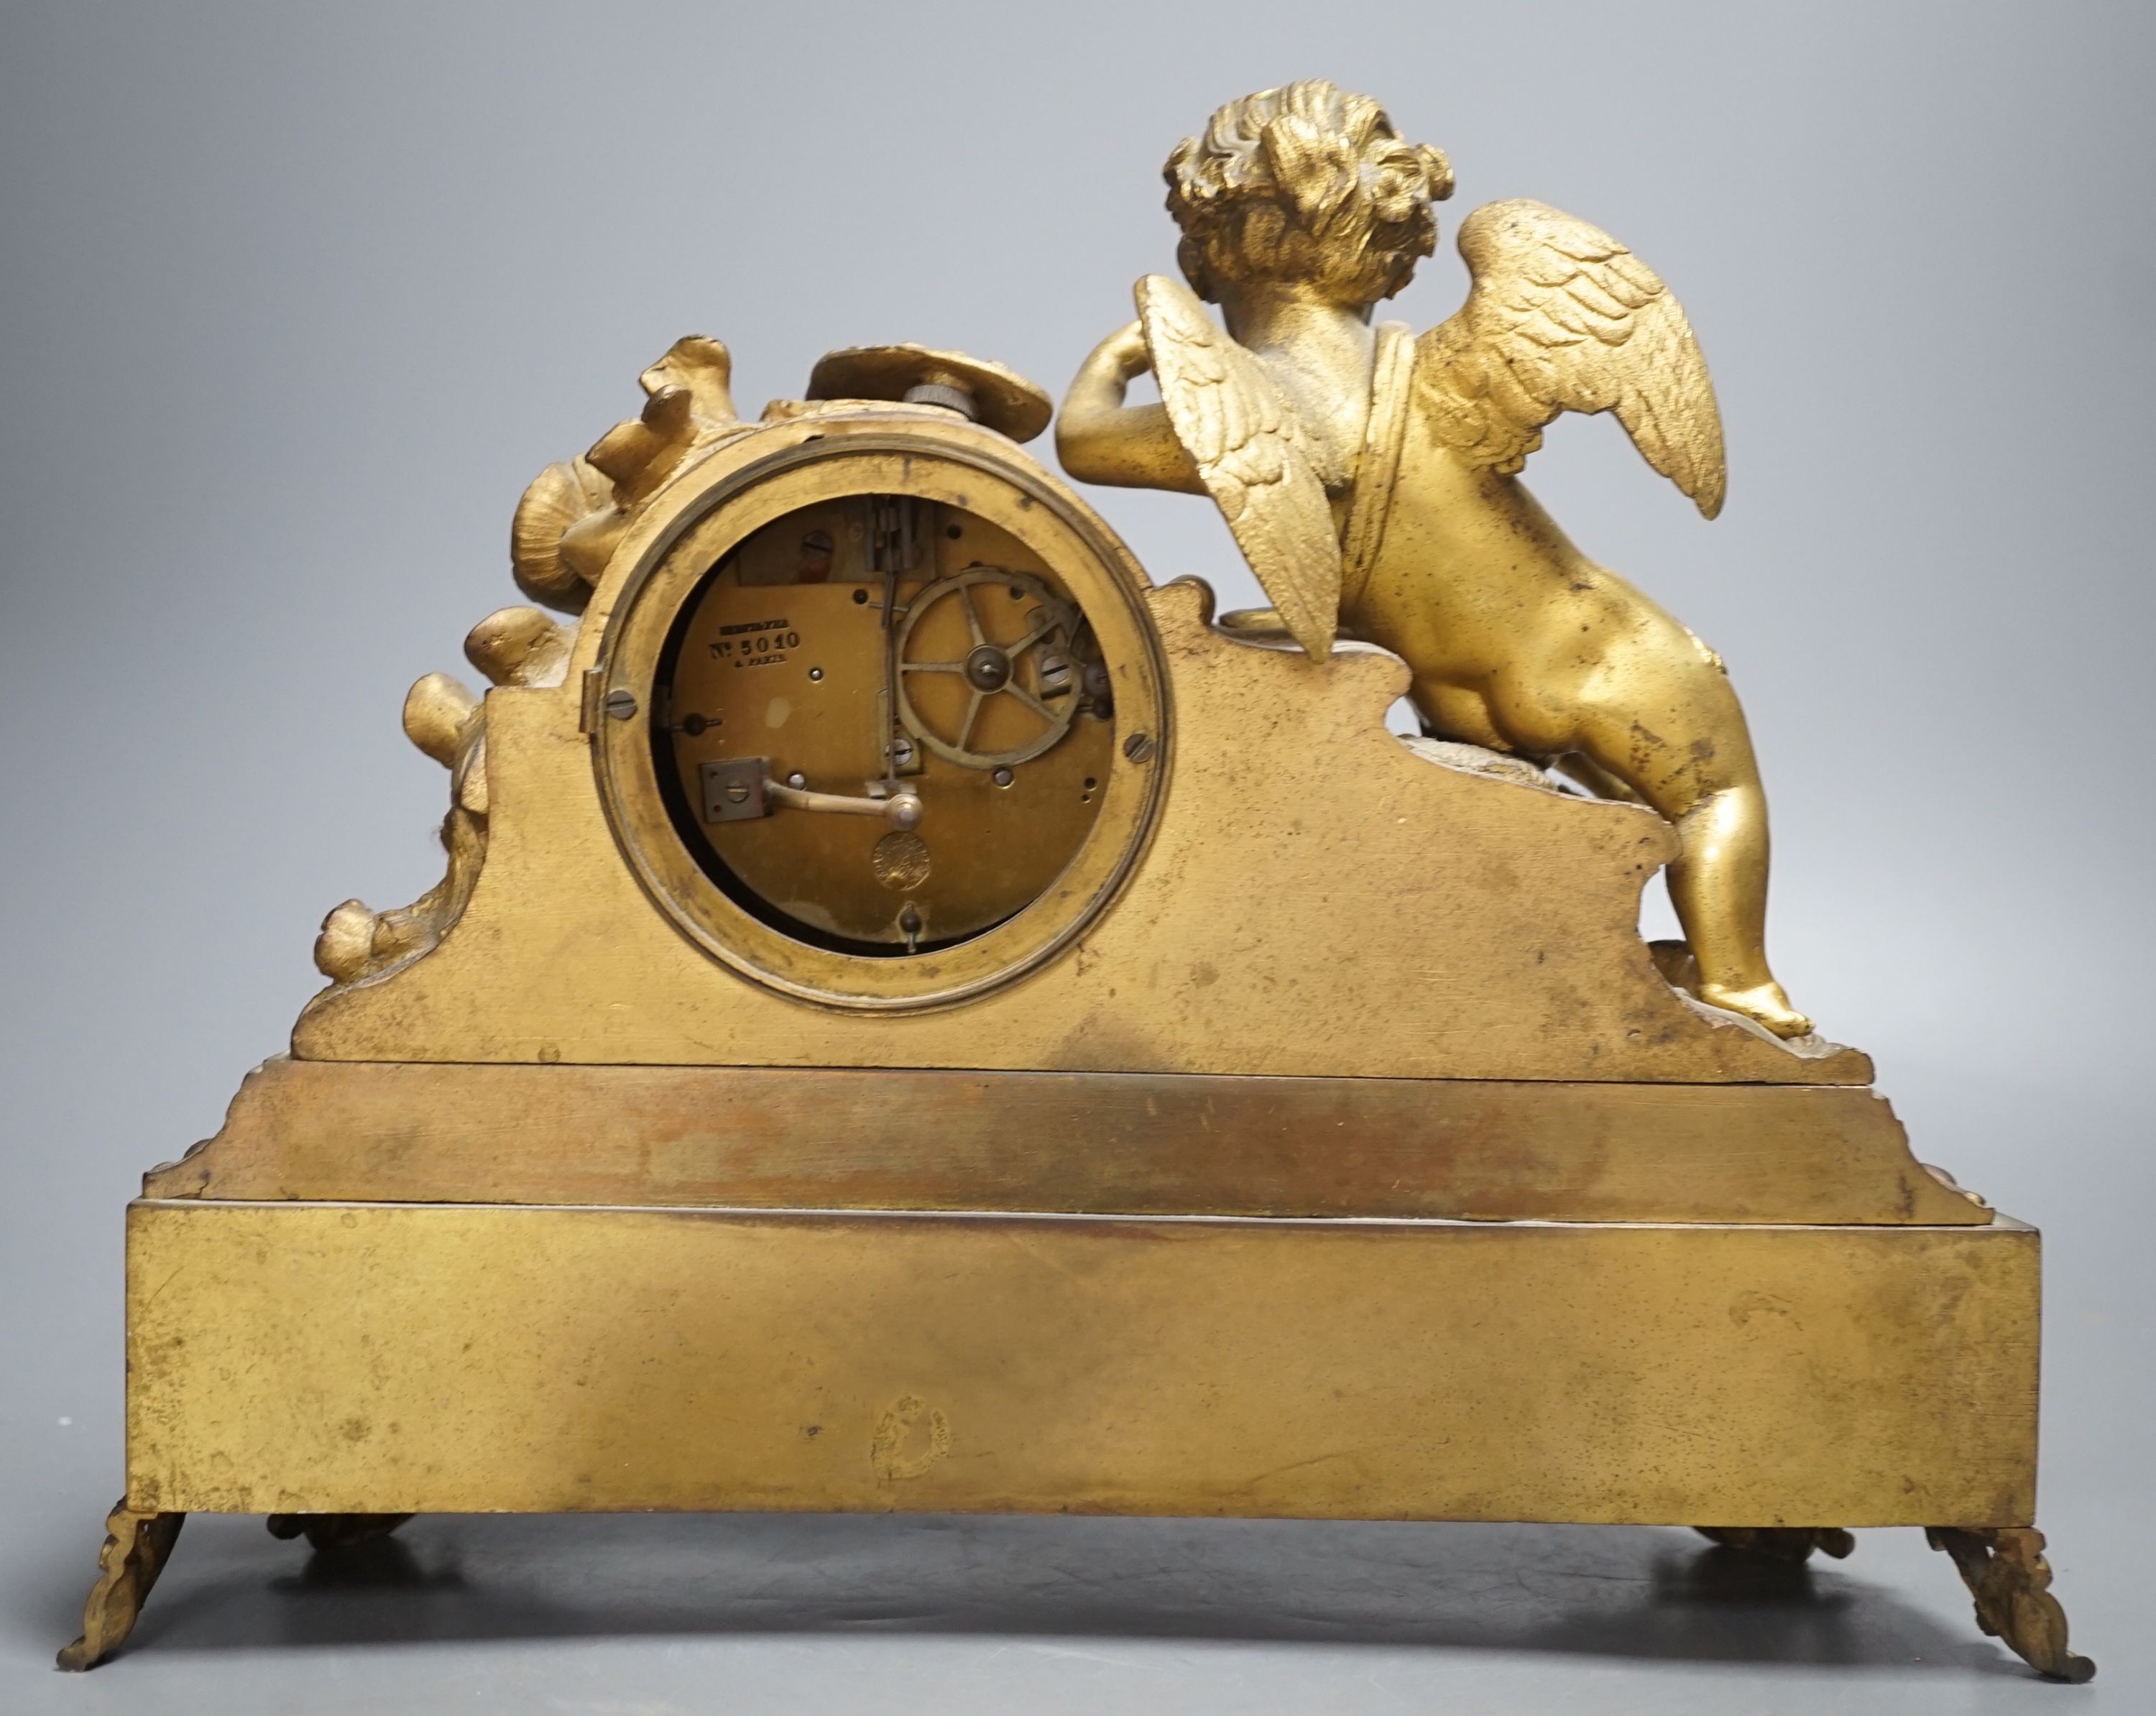 A French ormolu and Sevres style porcelain mounted putti mantel clock by Le Roy et Fils, Palais Royale, Paris, 26 cms high.